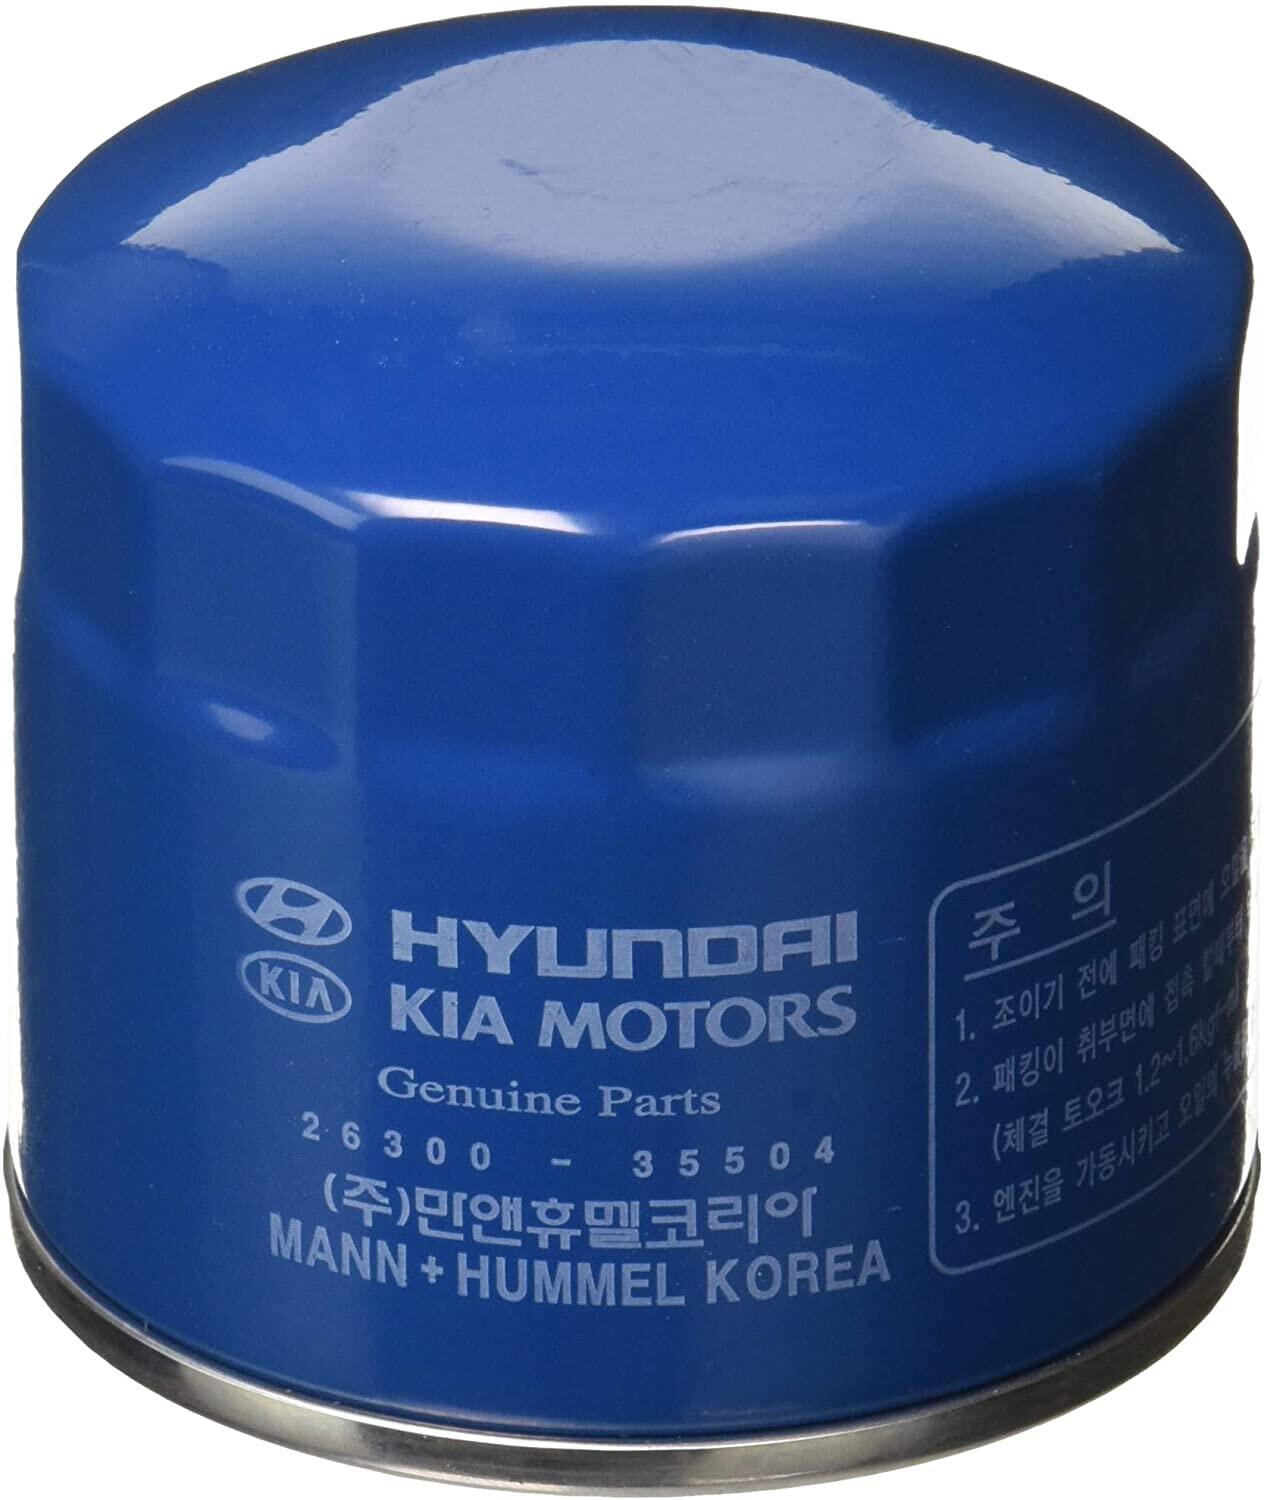 Hyundai Oil Filter 26300-02503 for Hyundai Accent / Getz / Eon / i10 / Kia Rio / Carens / Picanto